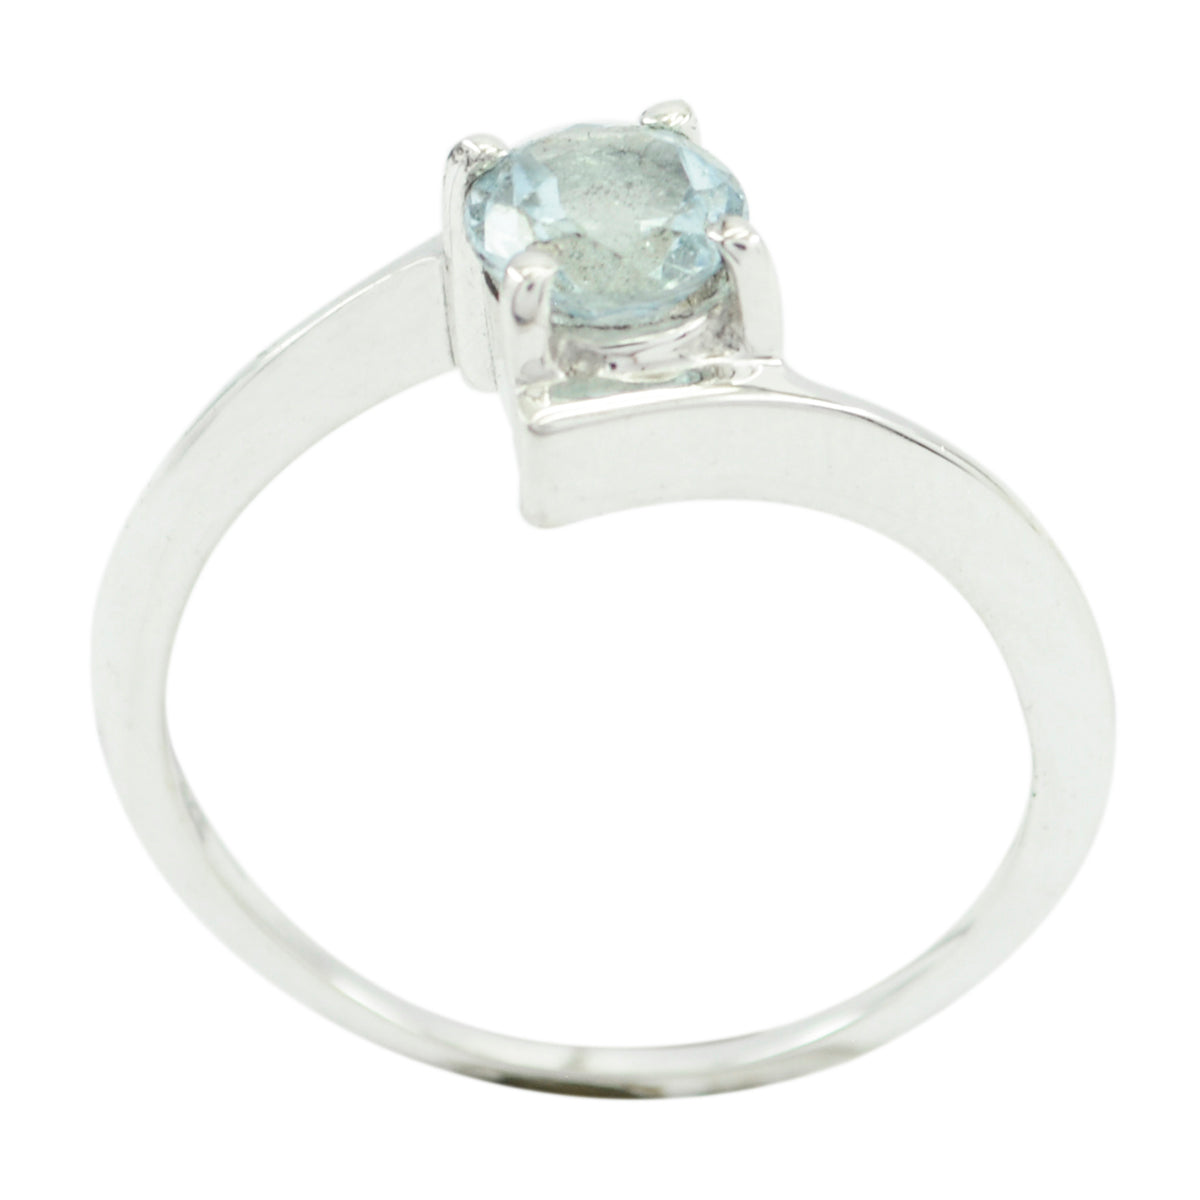 Chocolate-Box Gemstones Blue Topaz 925 Silver Ring Jewelry Pouch